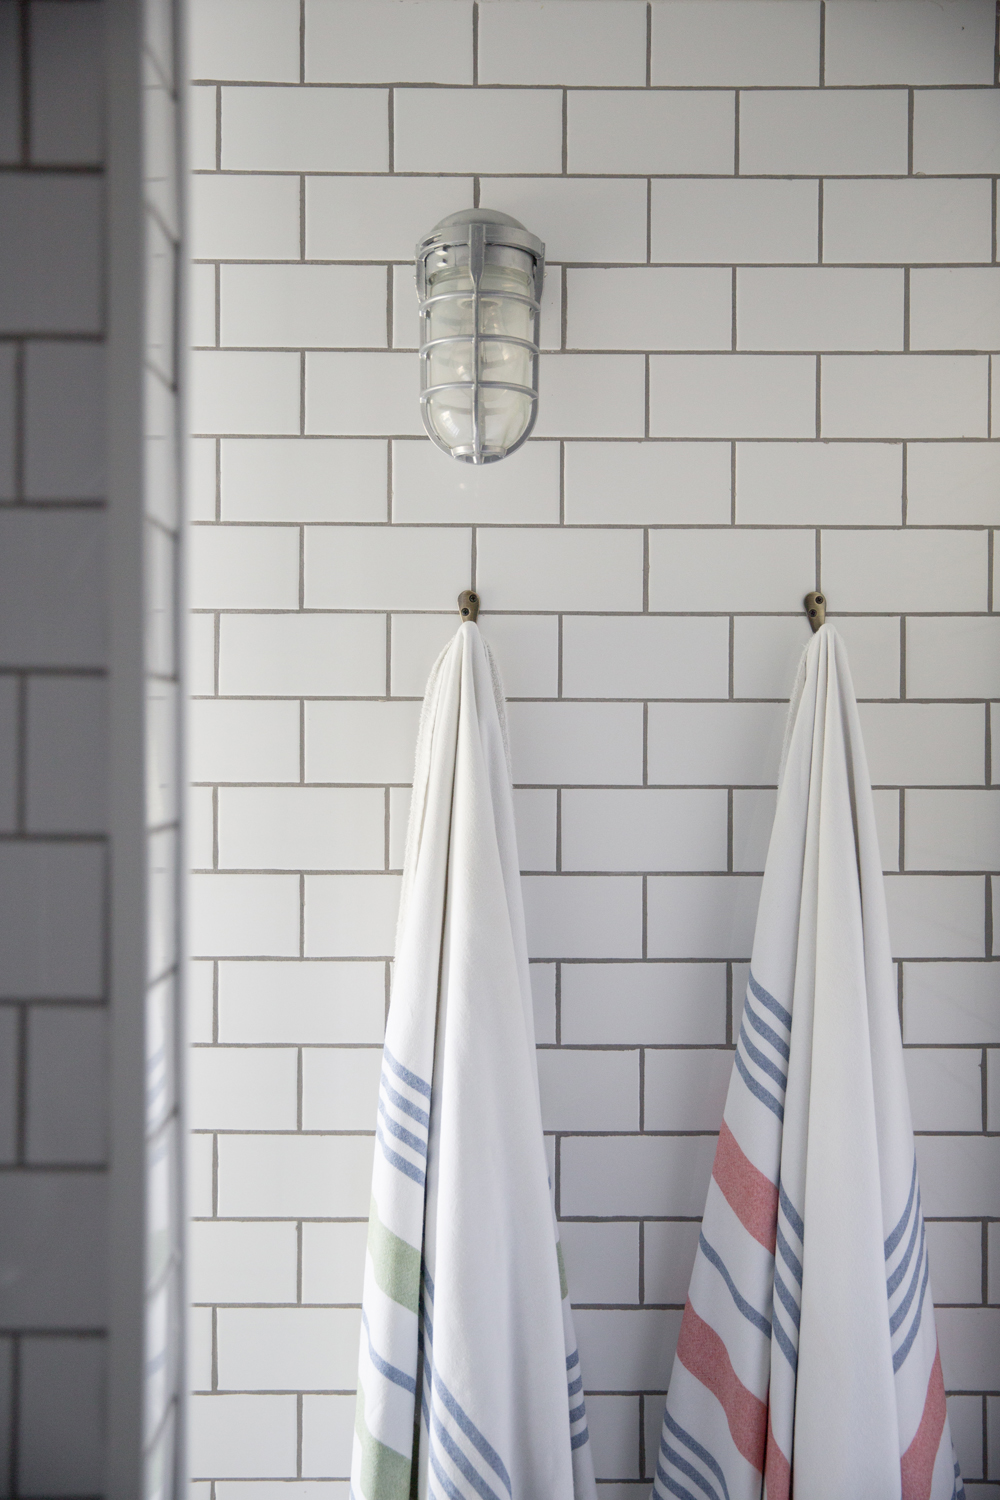 Turkish bath towels hanging against white subway tile bathroom wall